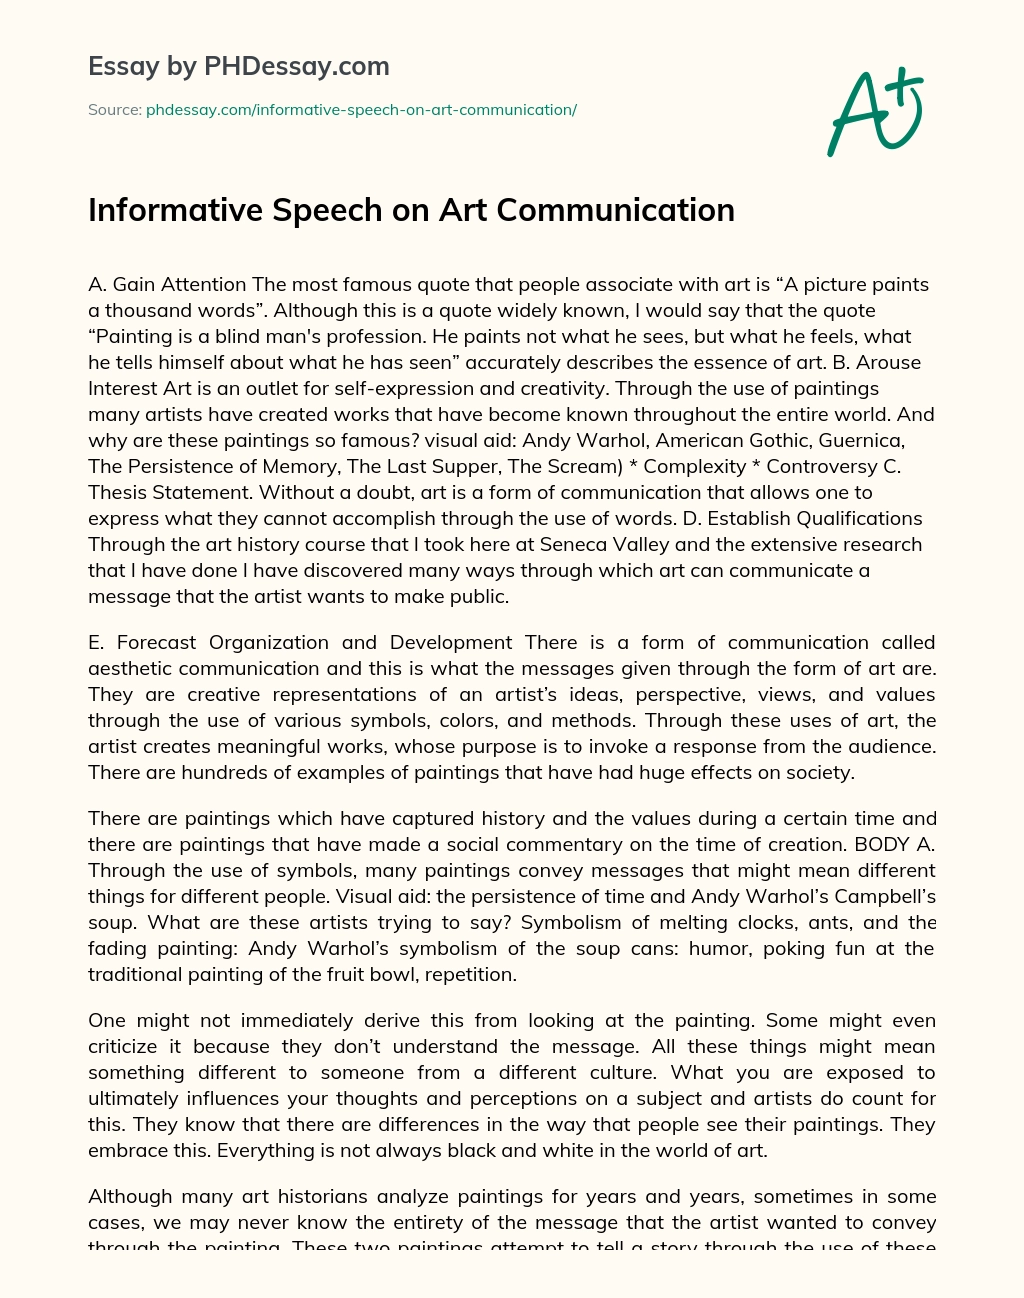 Informative Speech on Art Communication essay